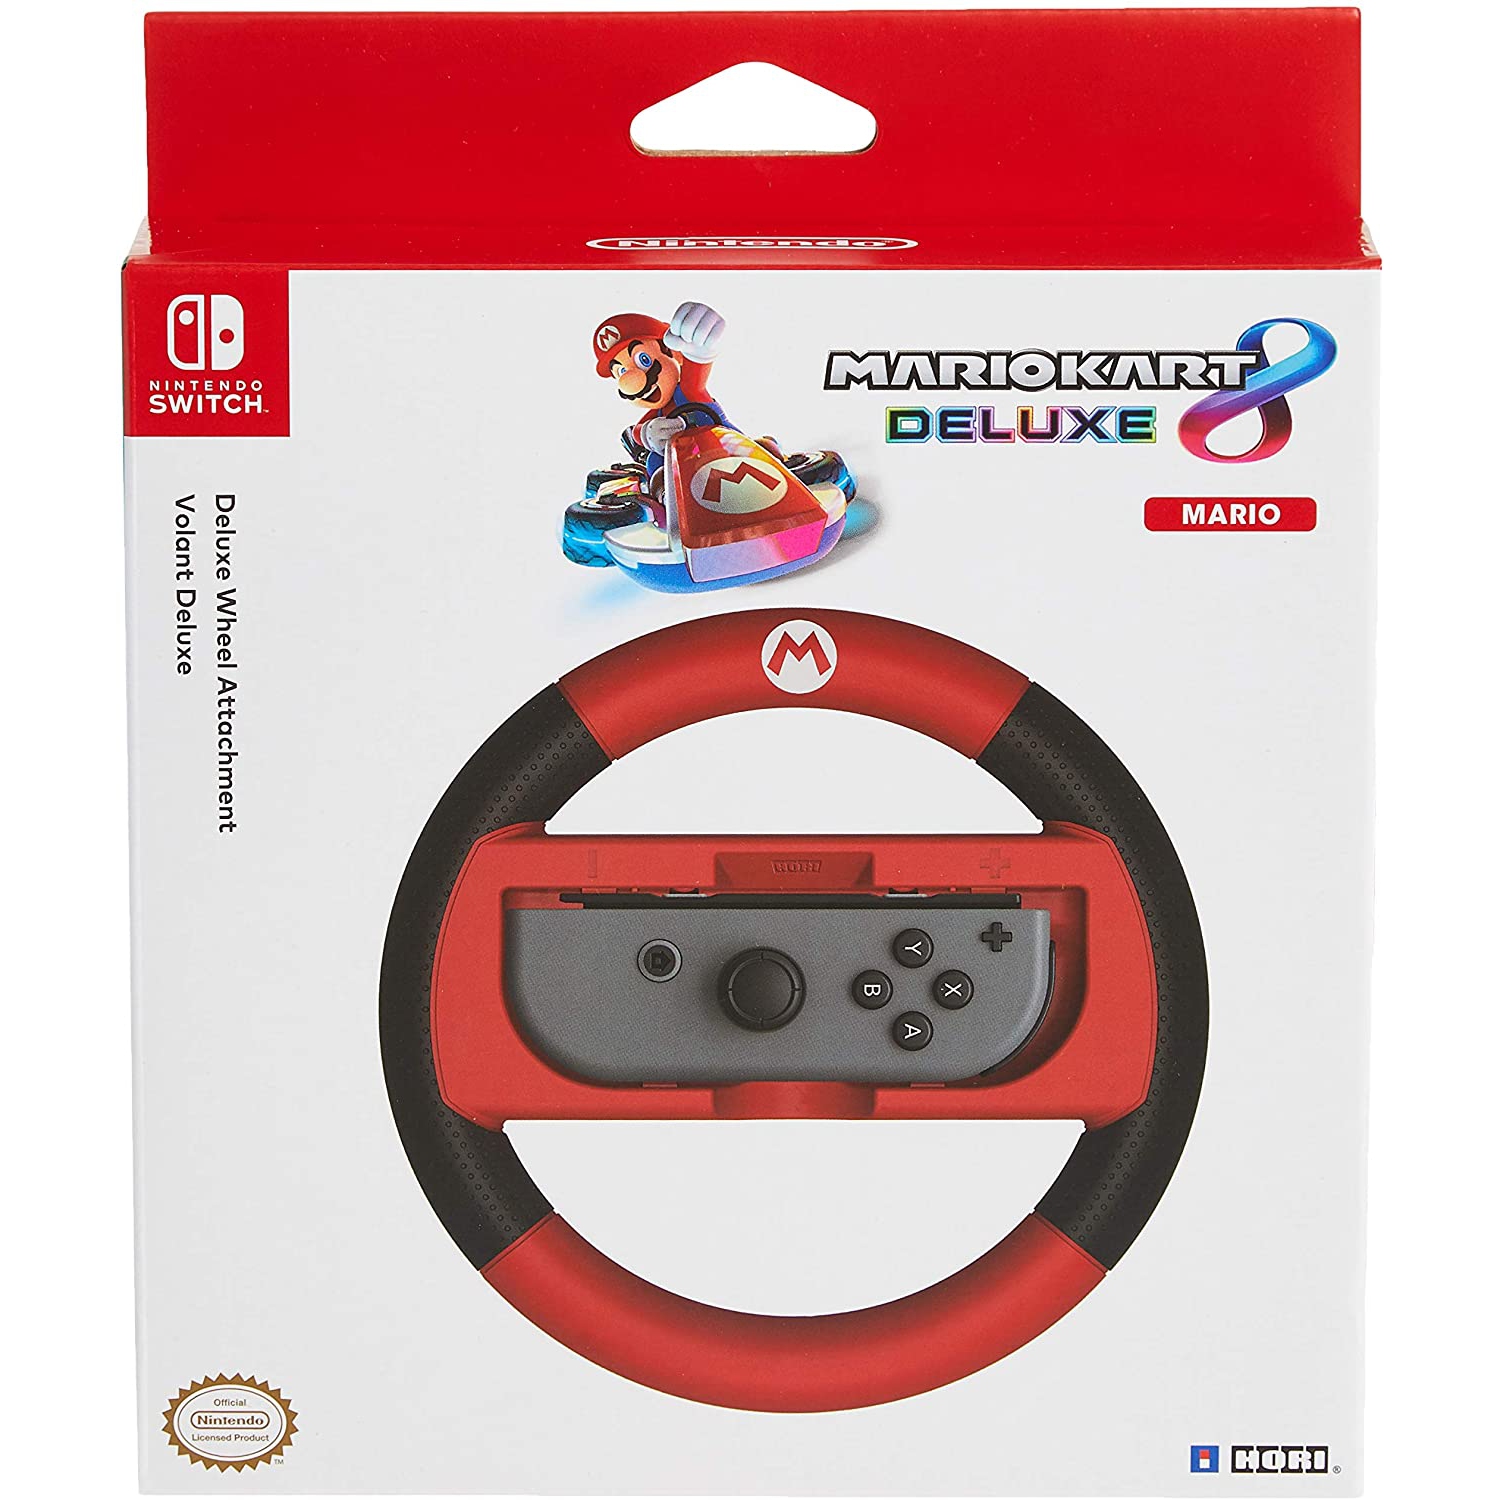 Nintendo Switch - Mario Kart Racing Wheel - Mario